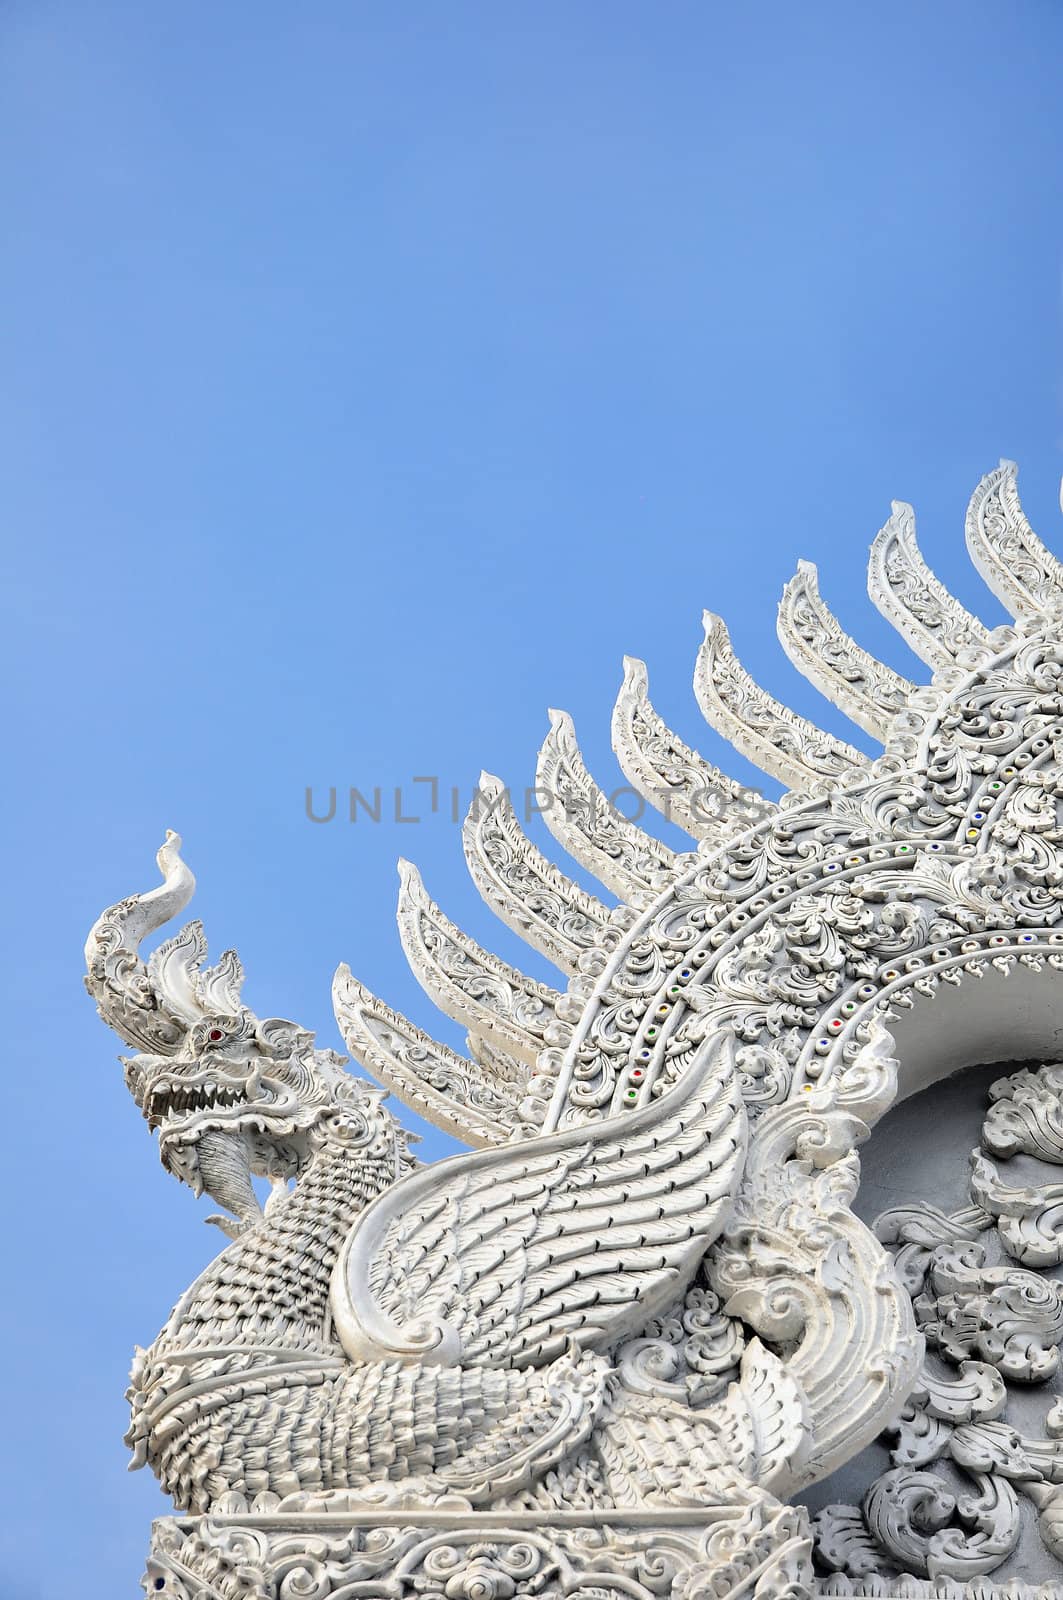 Creature statue on city pillar shrine of Nan district Thailand by TanawatPontchour